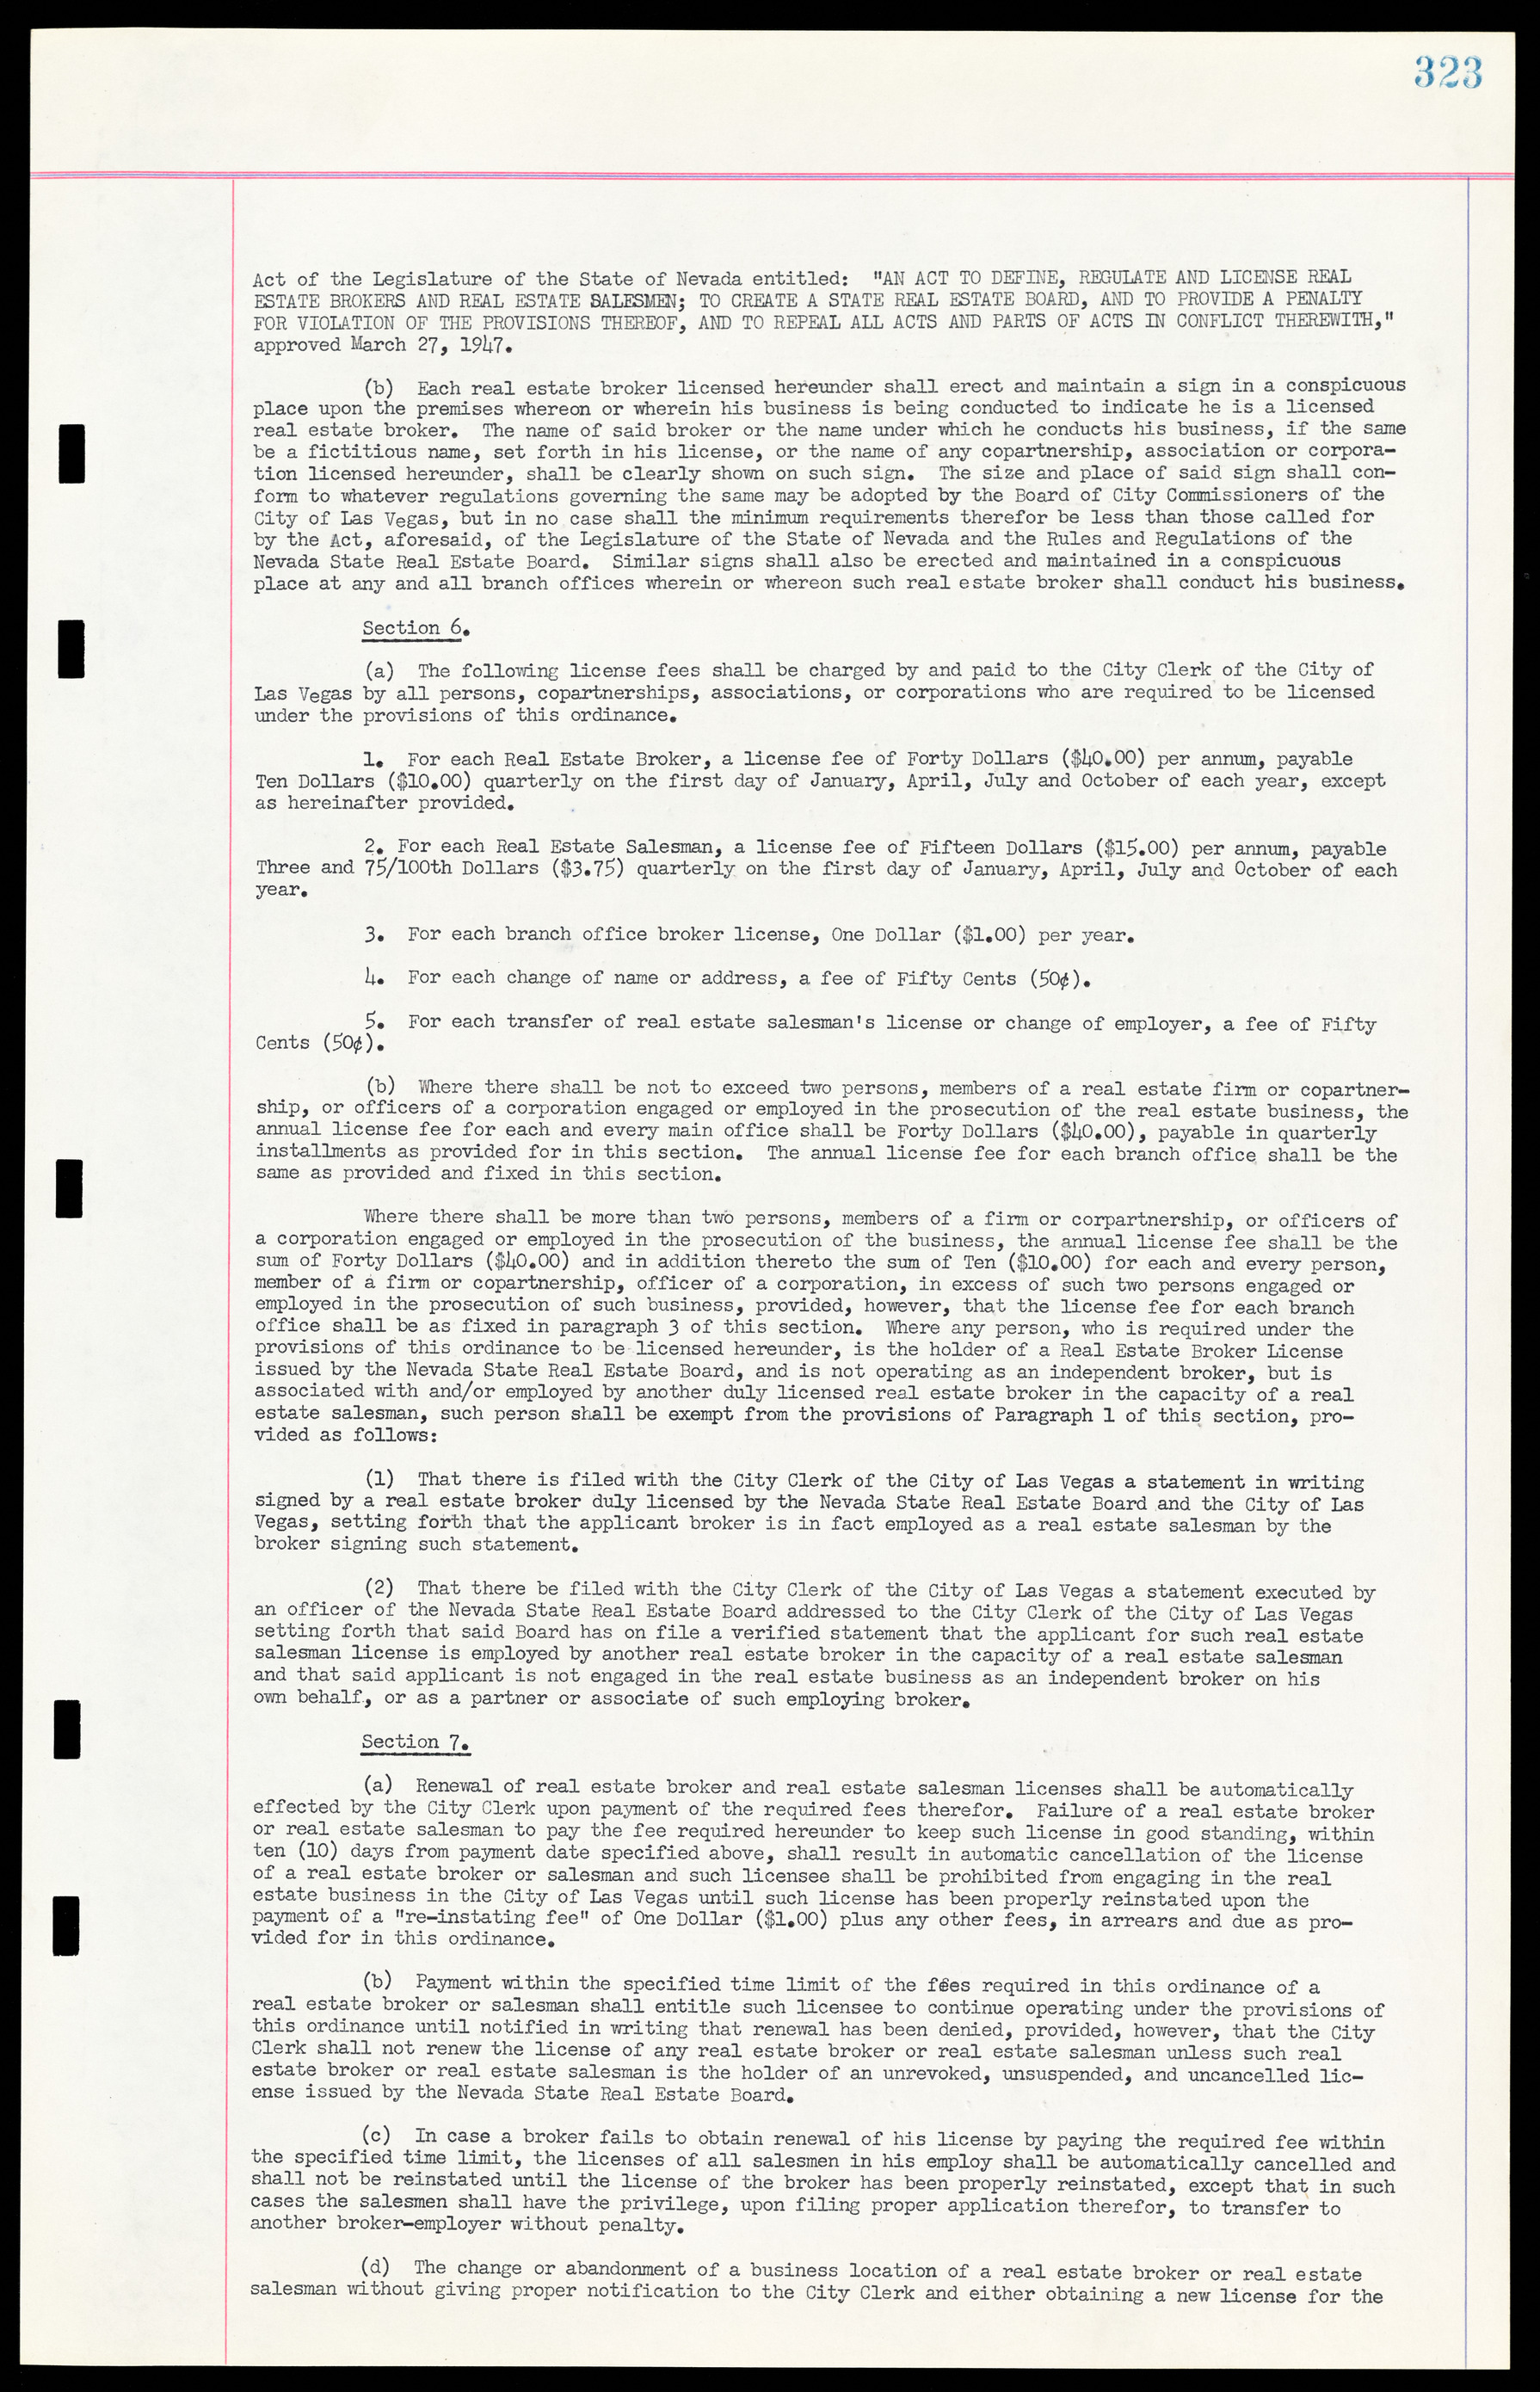 Las Vegas City Ordinances, March 31, 1933 to October 25, 1950, lvc000014-352